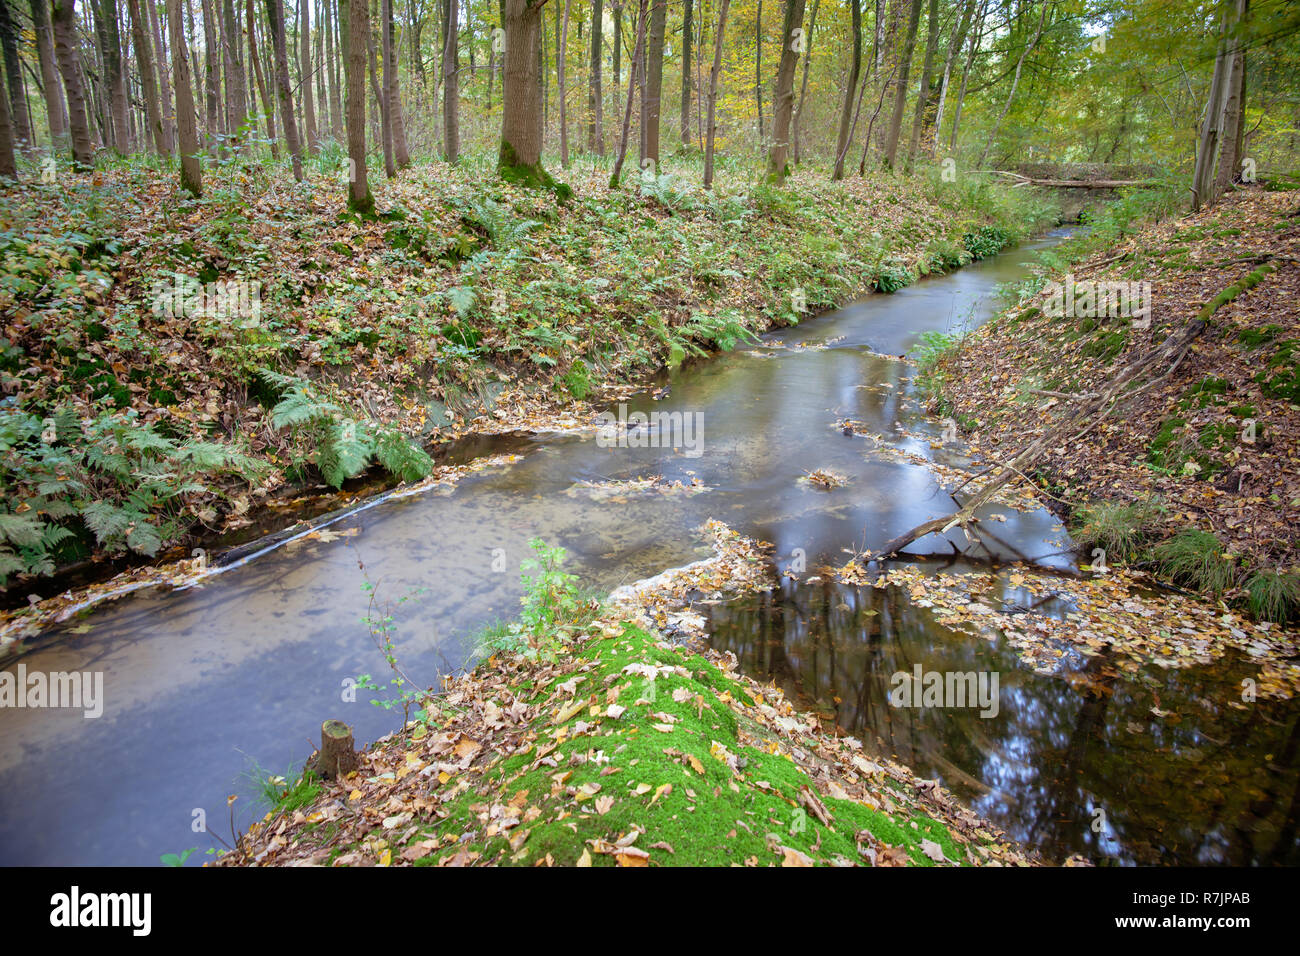 https://c8.alamy.com/comp/R7JPAB/flowing-water-in-stream-long-shutter-dutch-autumn-forest-voorsterbos-waterloopbos-R7JPAB.jpg